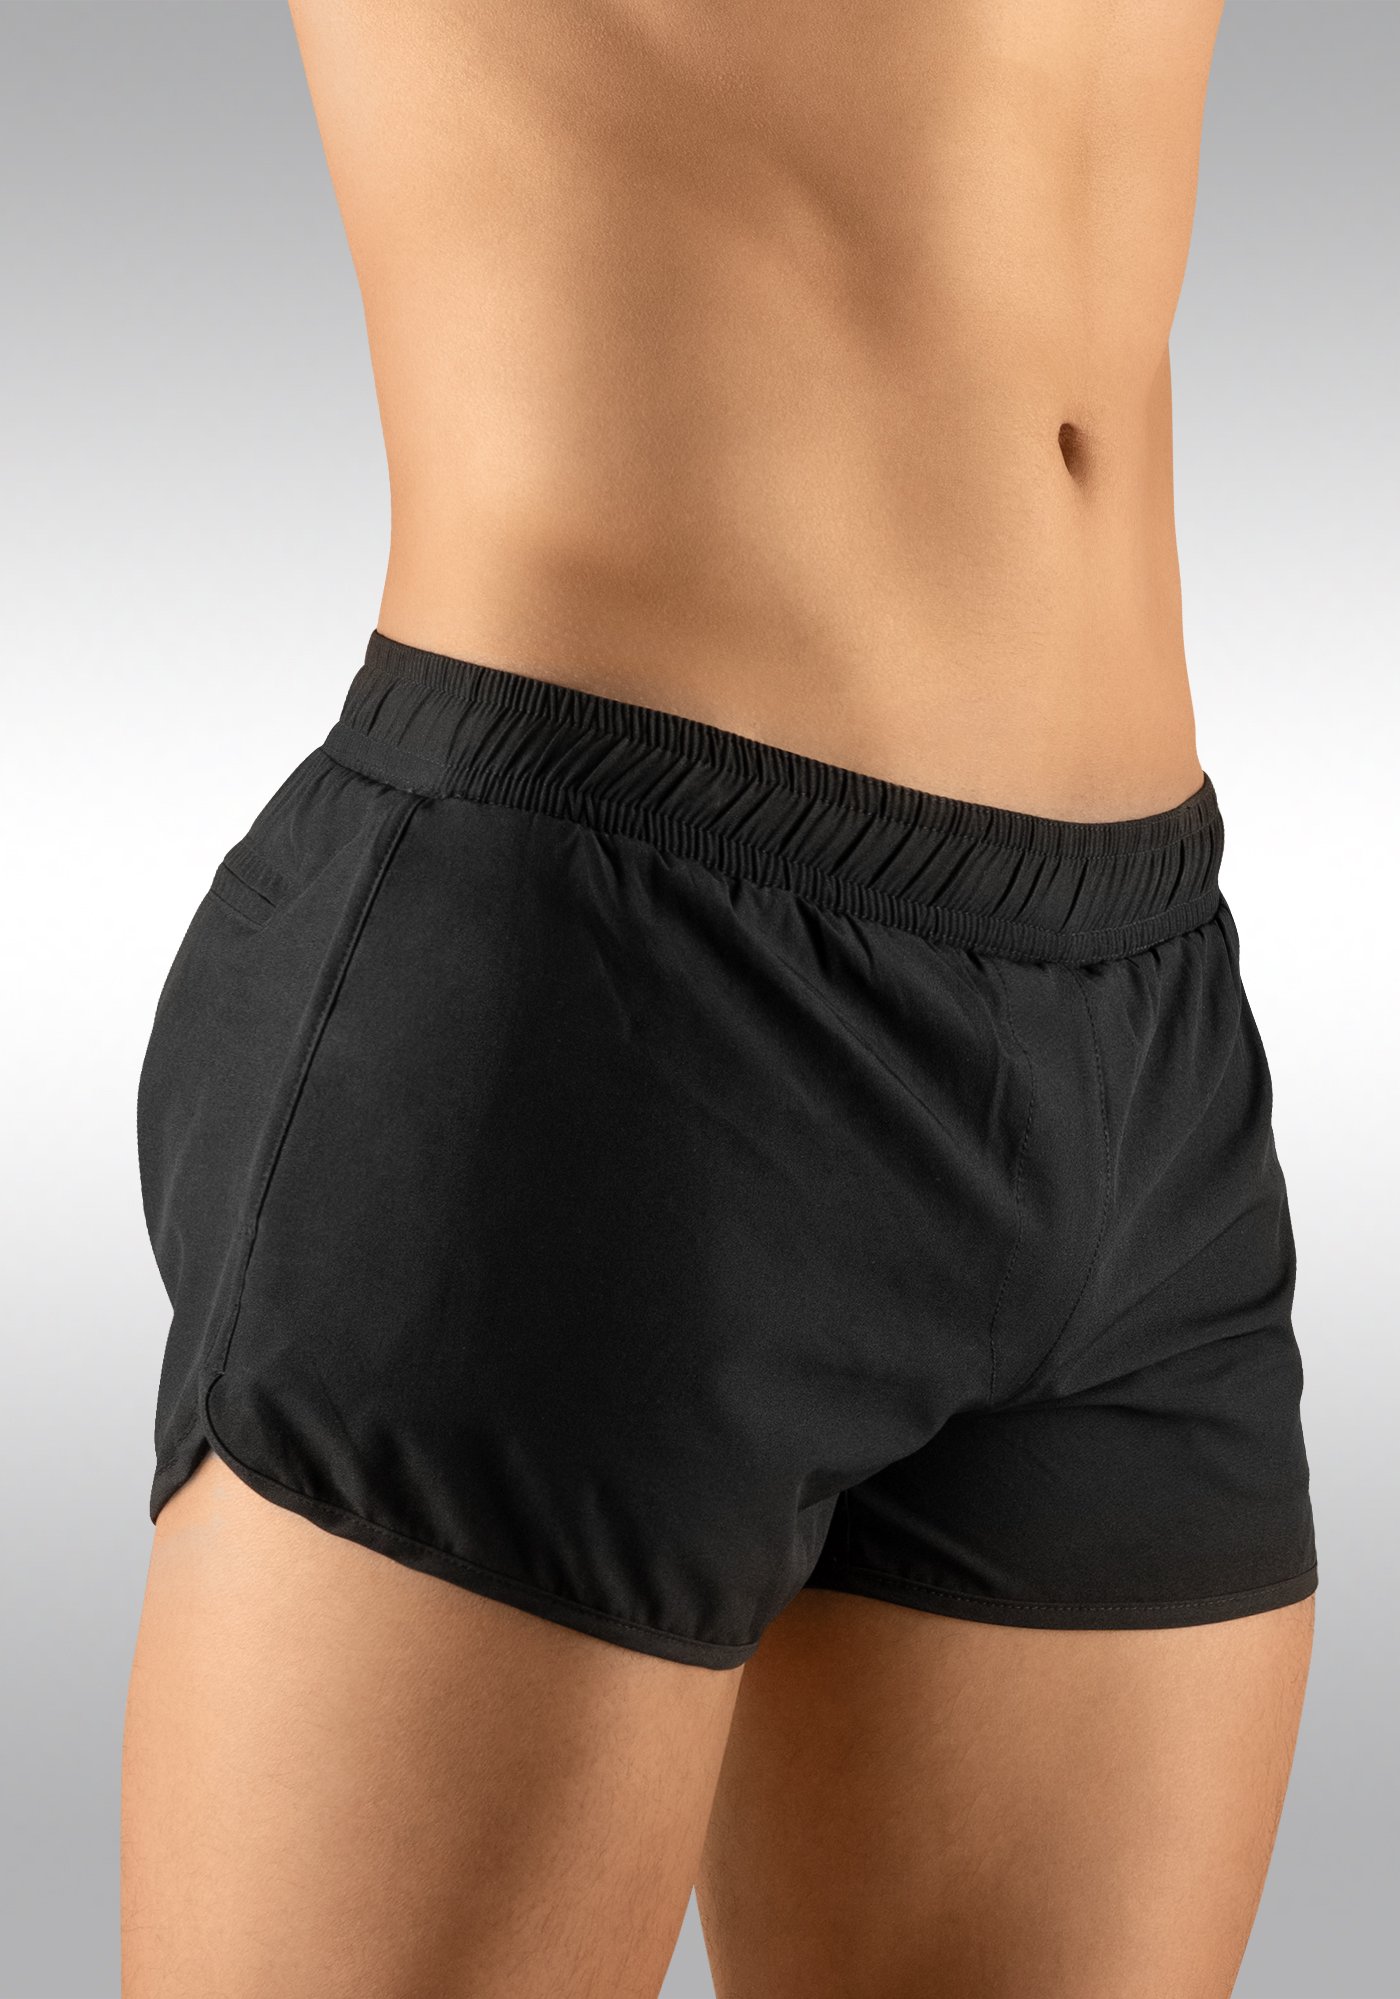 Men's Gym Short Black Side View - Ergowear